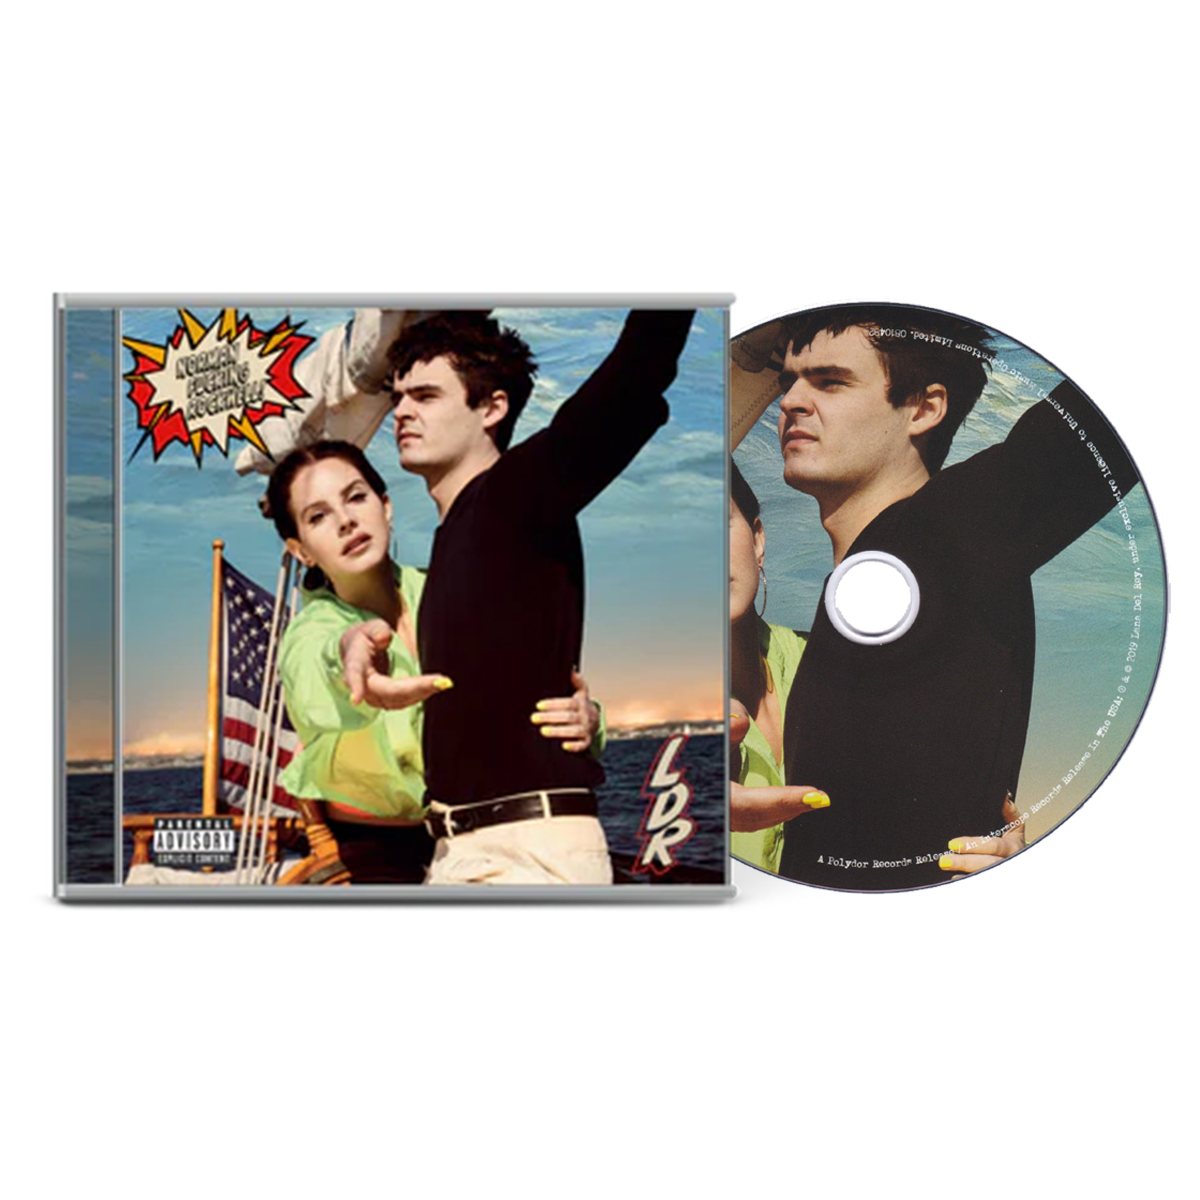 Lana Del Rey - Norman Fucking Rockwell! CD Album